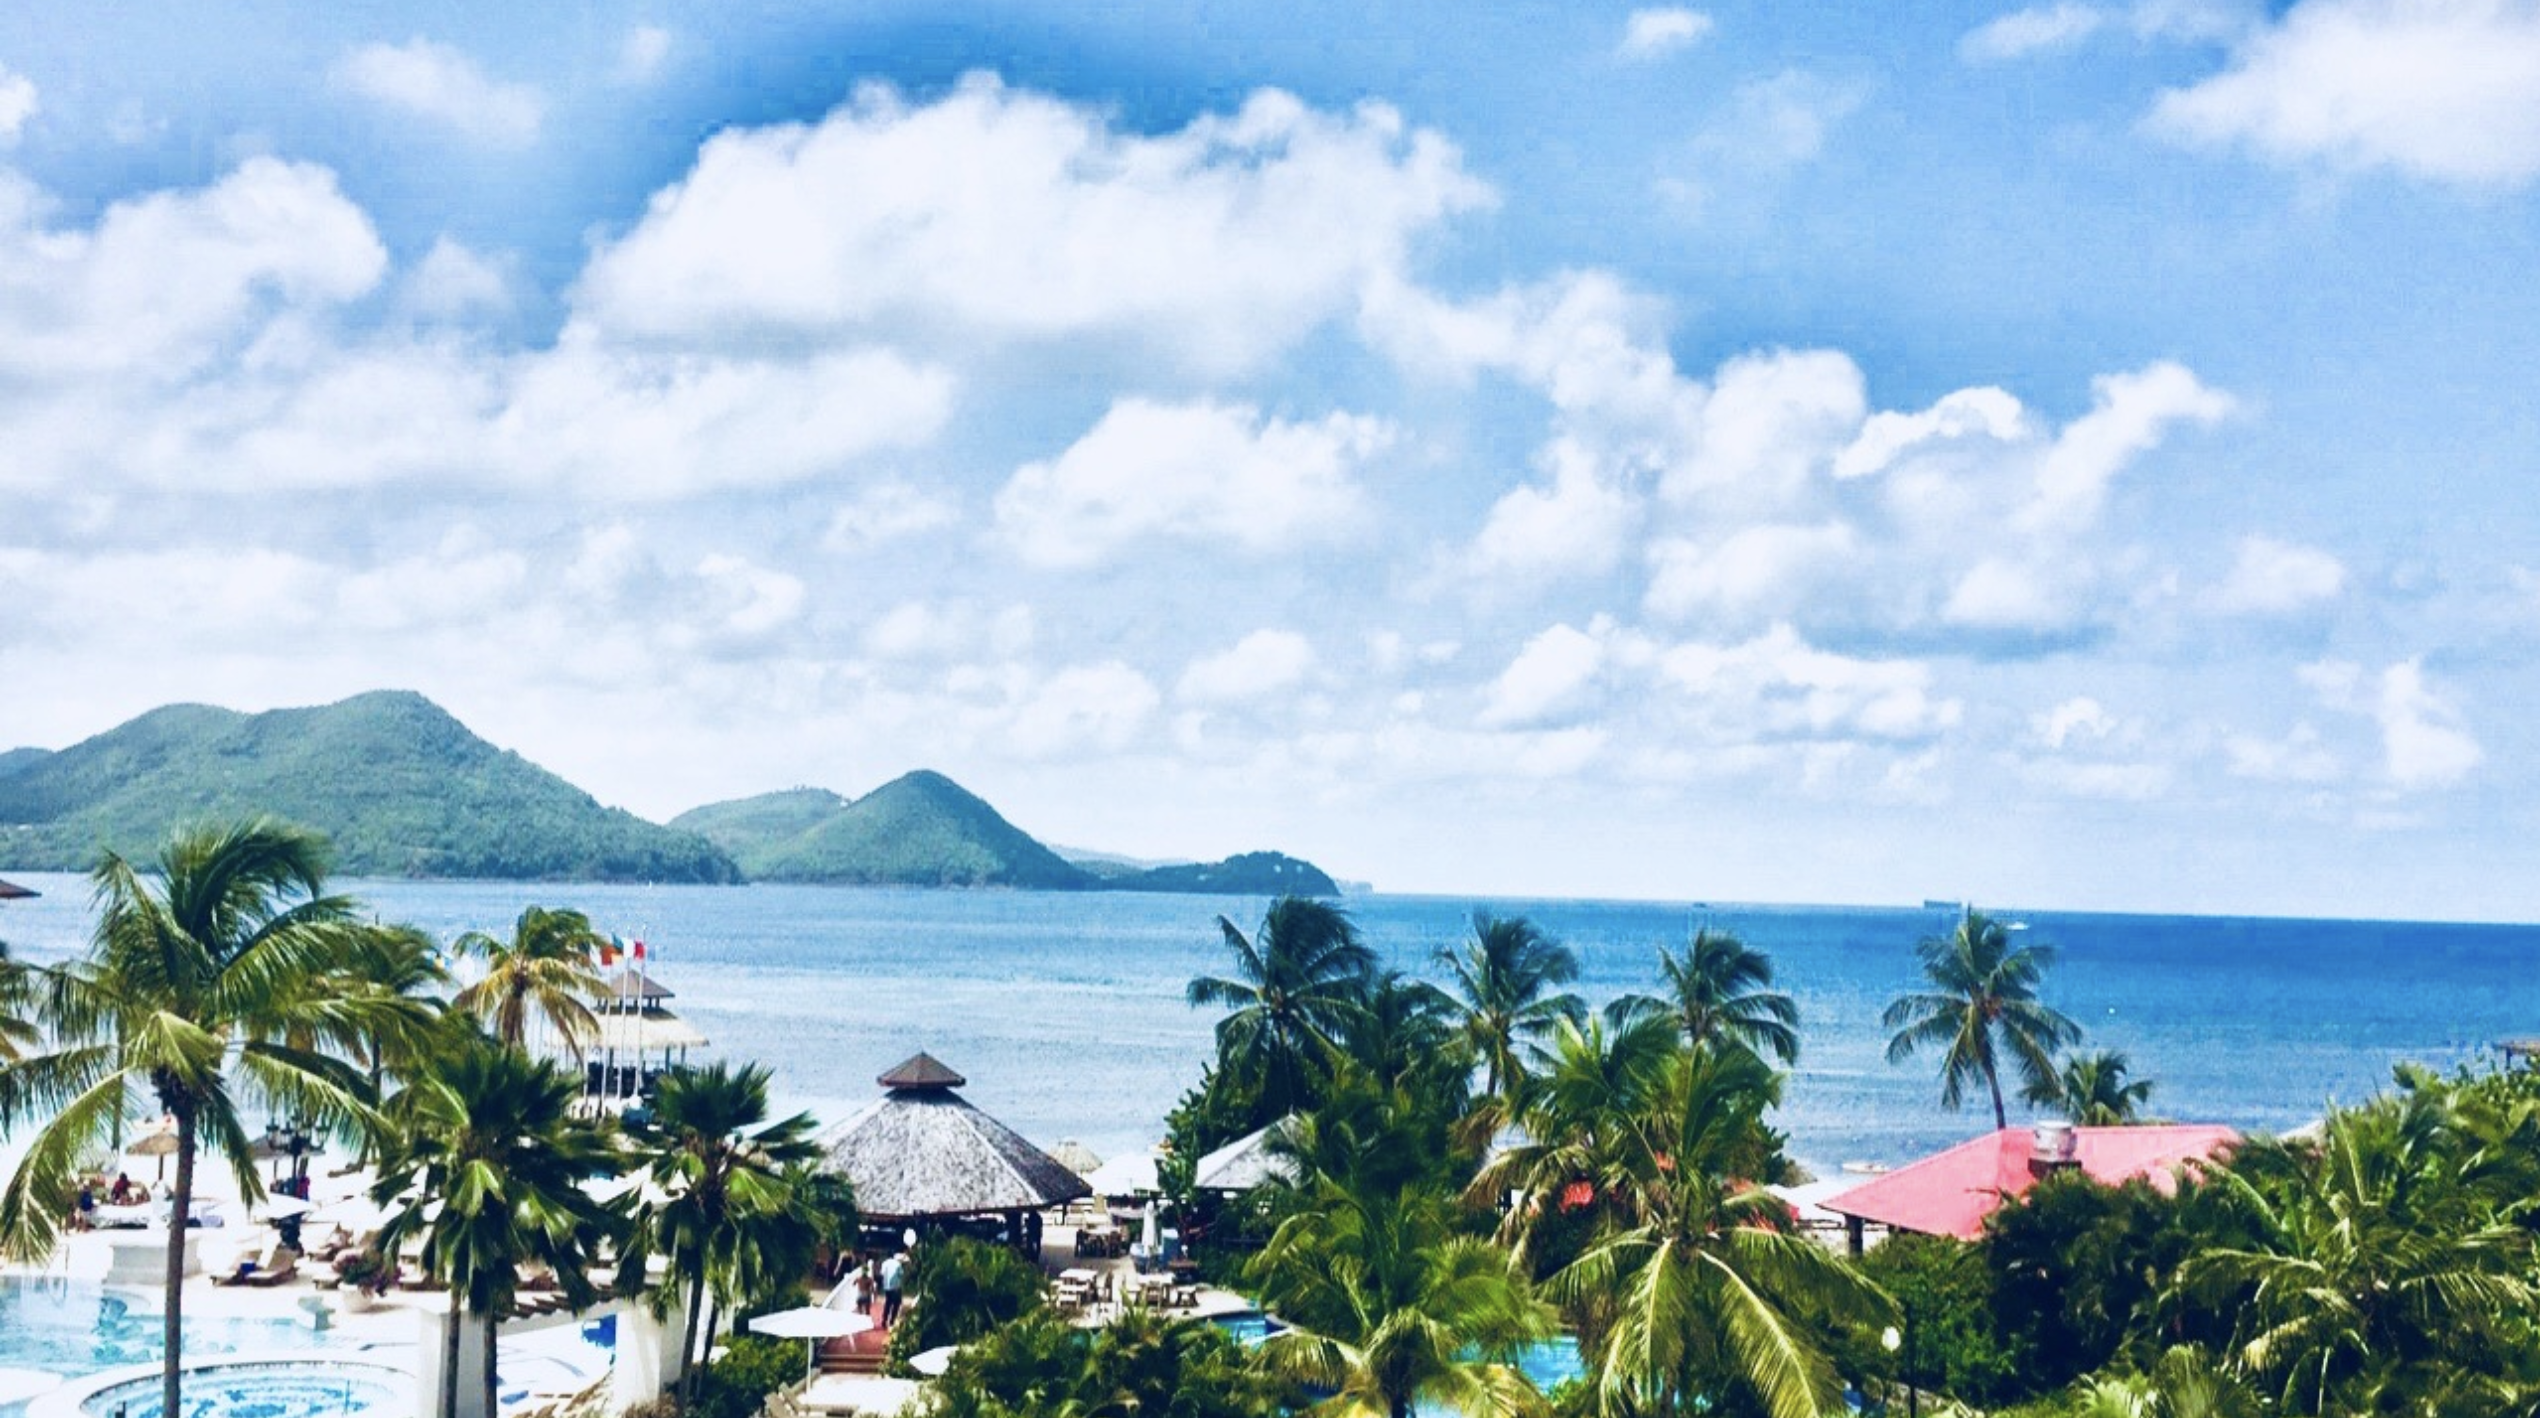 Sandals Grande St. Lucian Resort Honeymoon from 2 Travel Anywhere